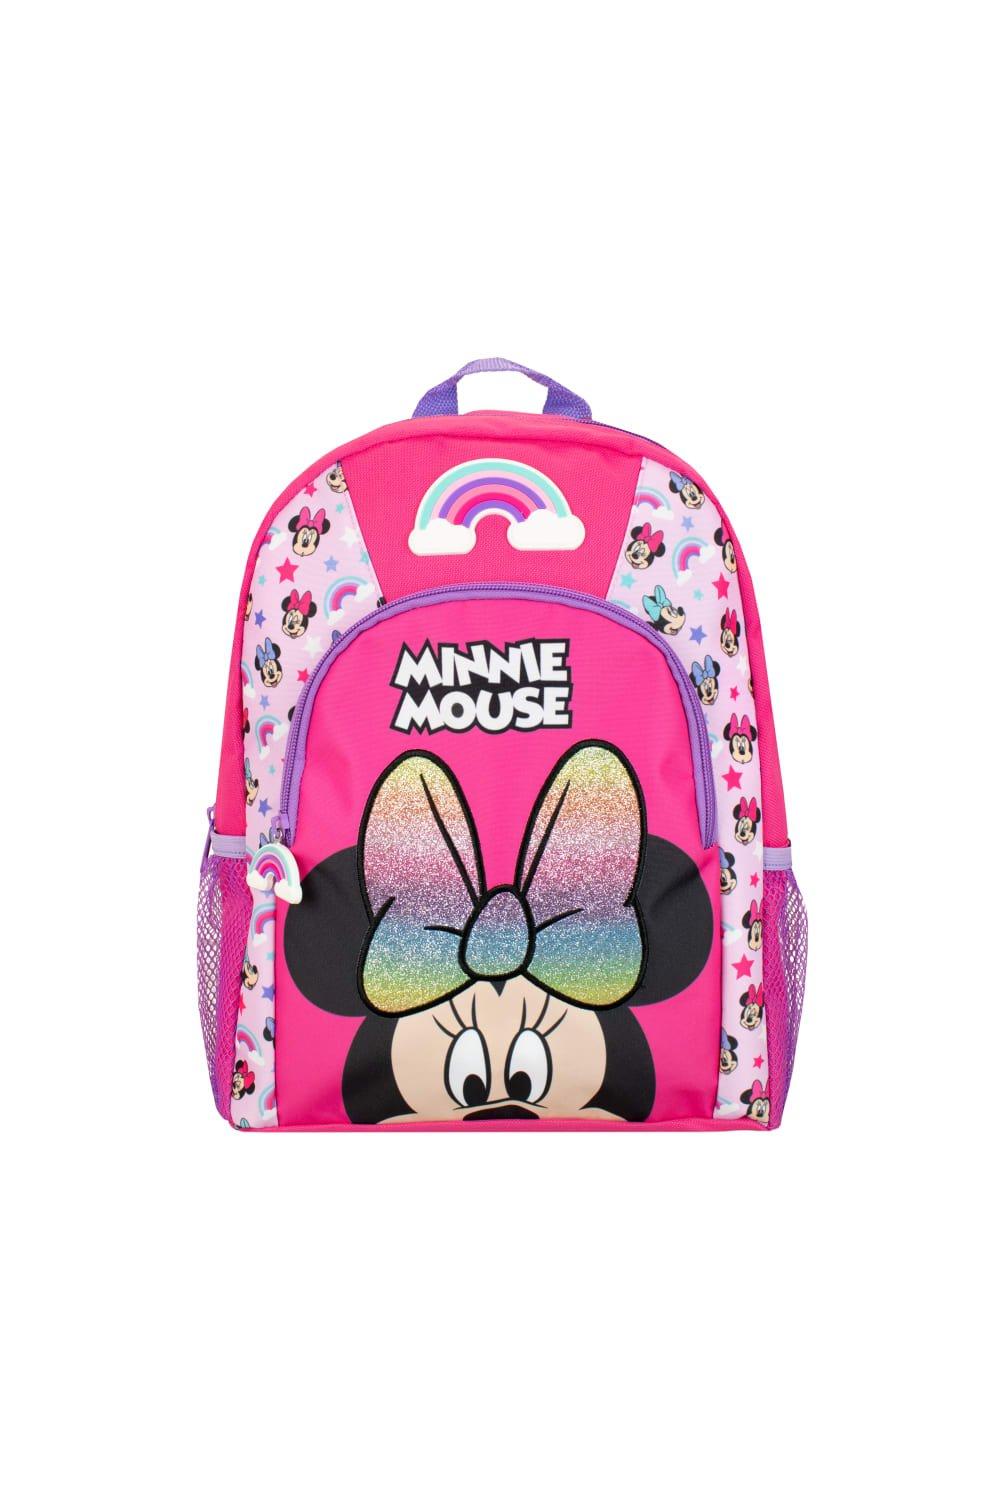 Детский рюкзак с Минни Маус Disney, розовый рюкзак минни маус mickey mouse белый 4